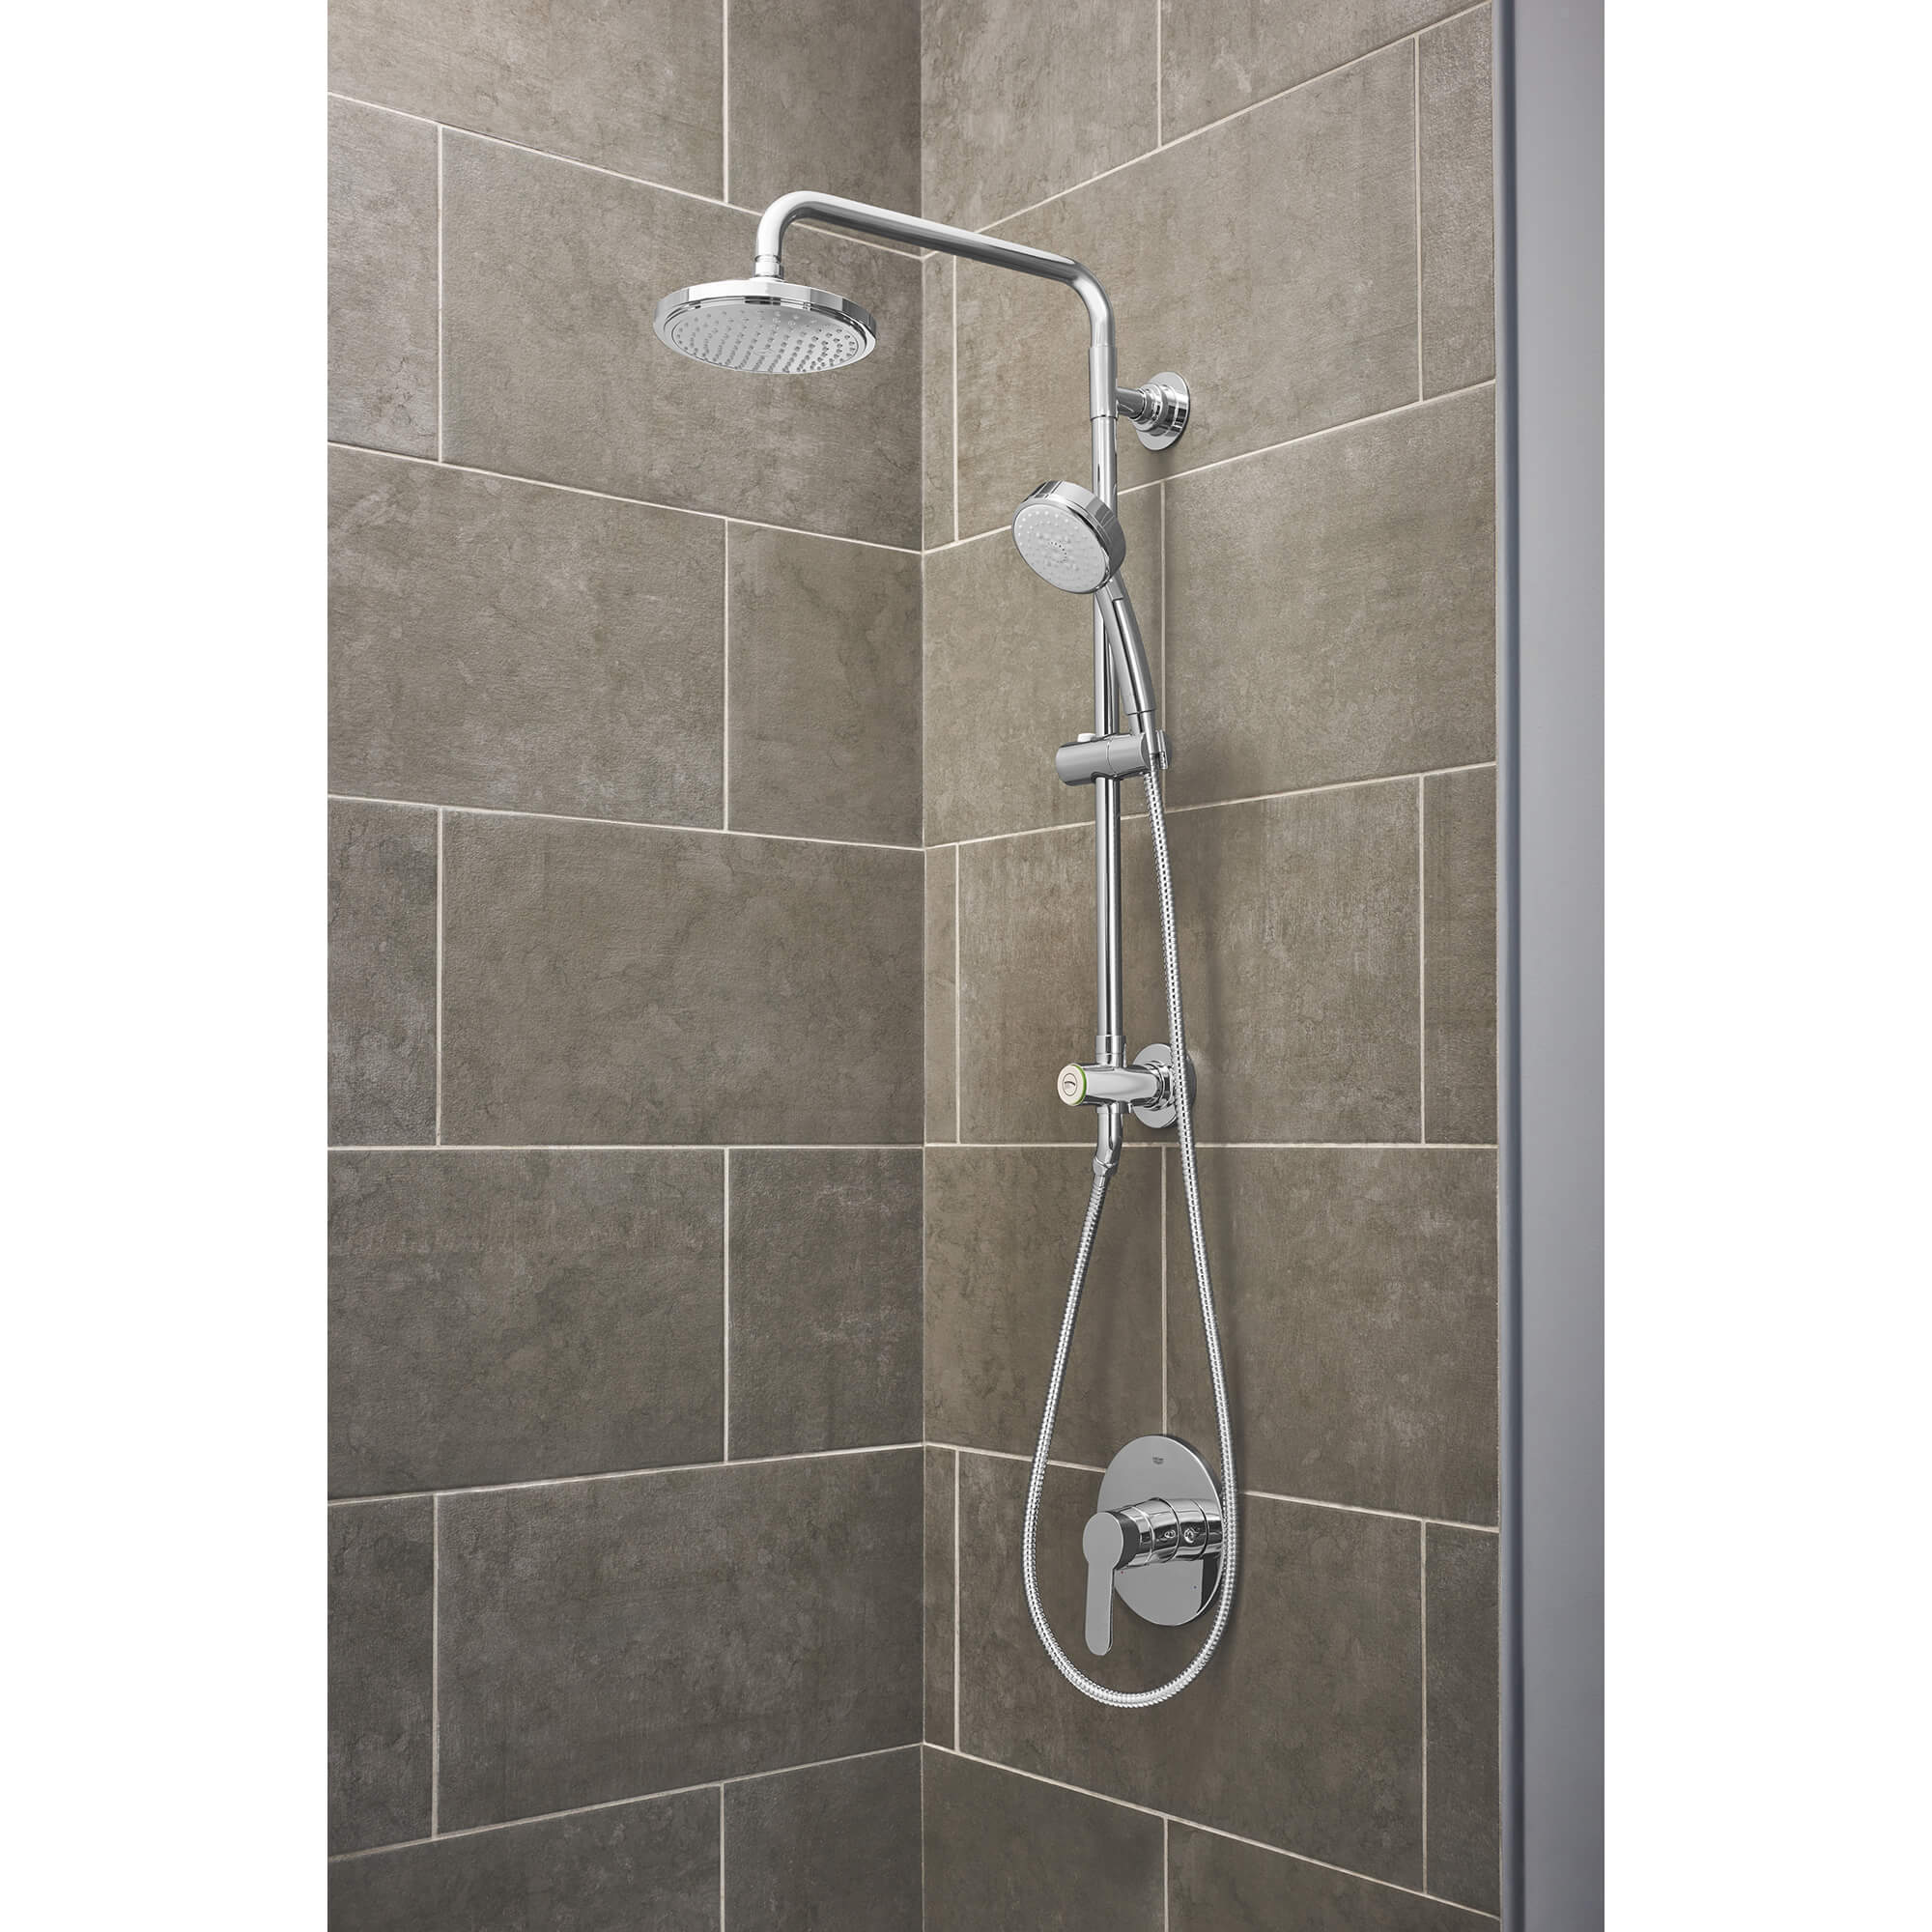 knecht Buitensporig bureau Shower System, 1.75 gpm